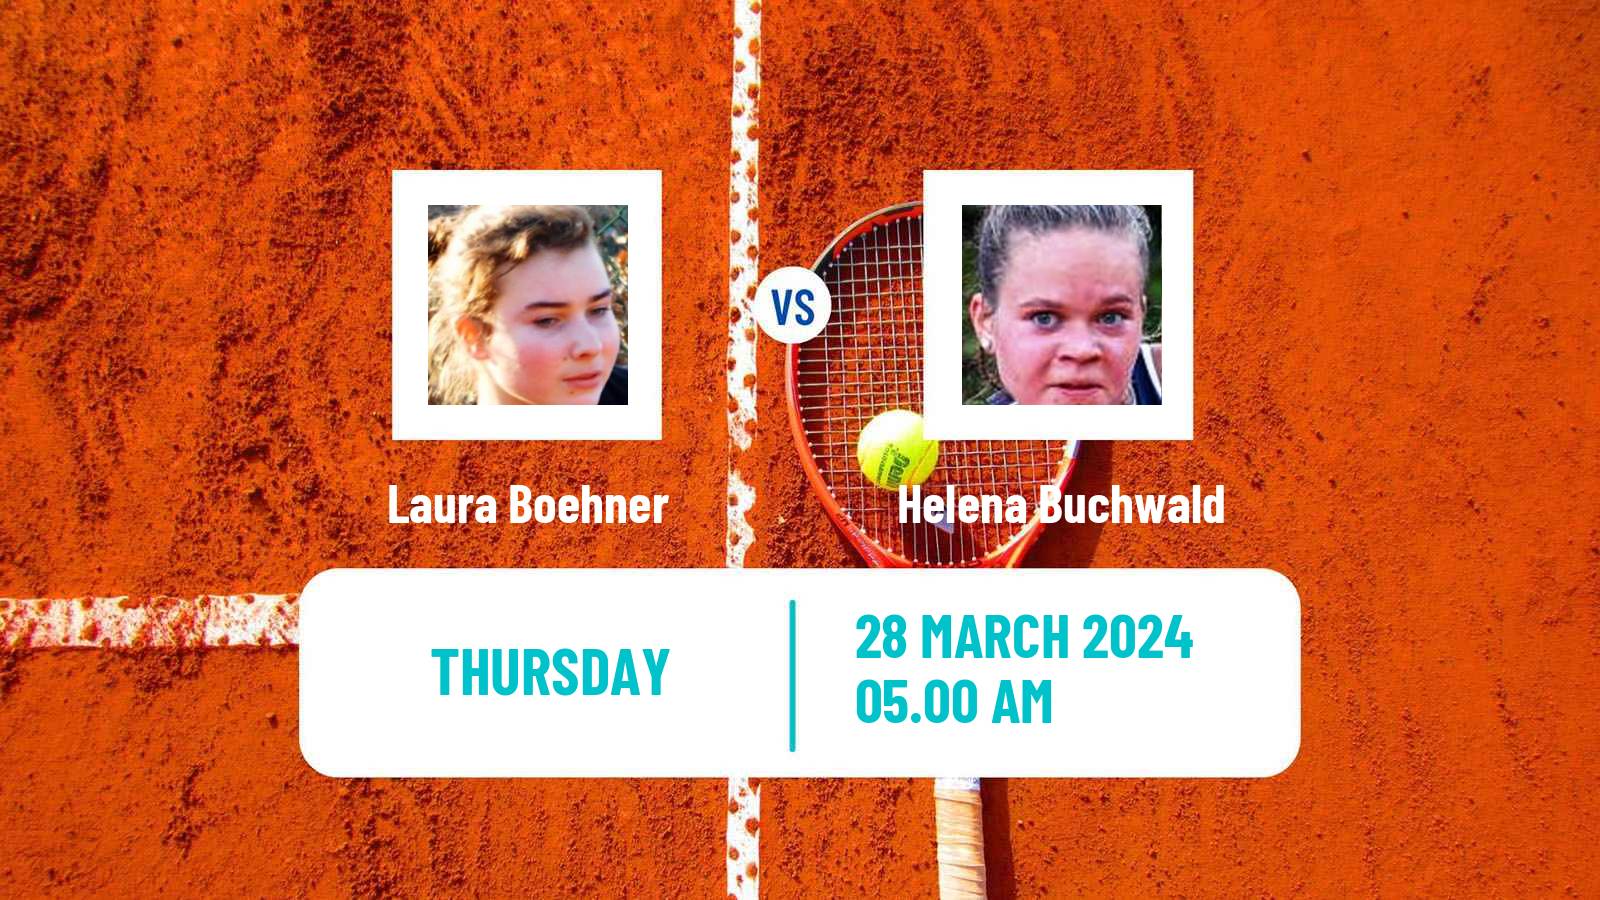 Tennis ITF W15 Antalya 7 Women Laura Boehner - Helena Buchwald